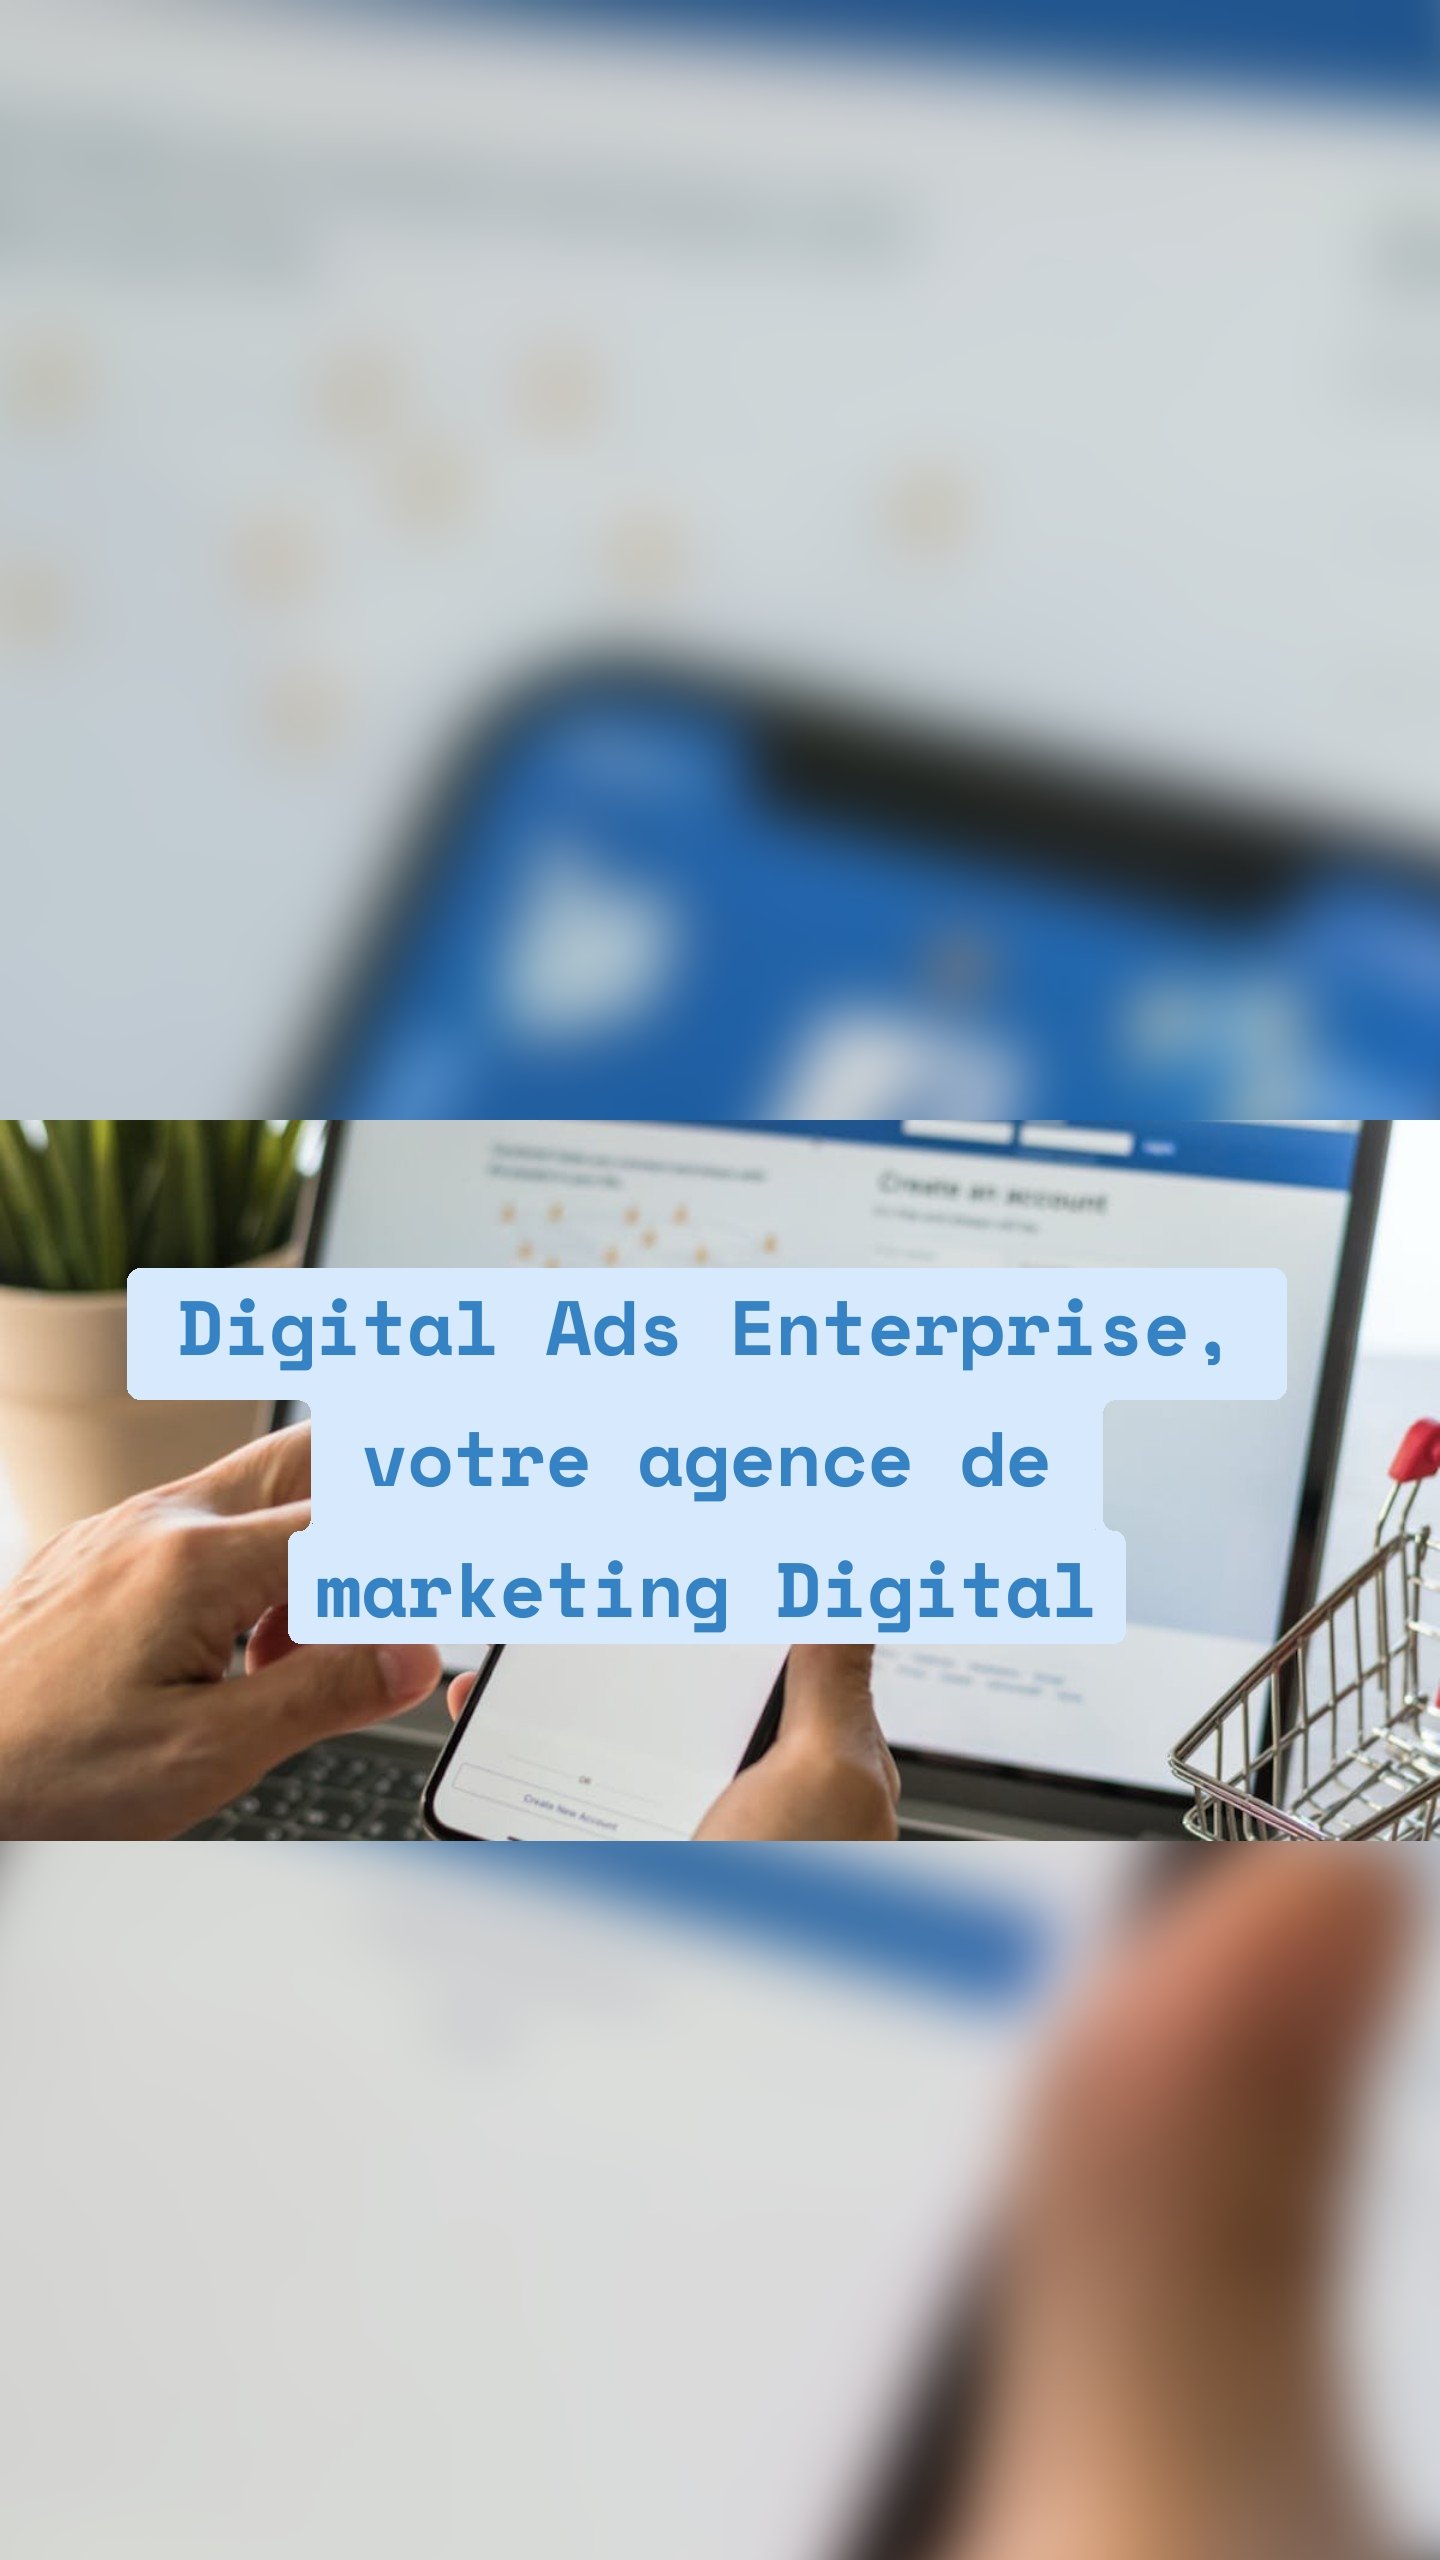 Digital Ads Enterprise, votre agence de marketing Digital